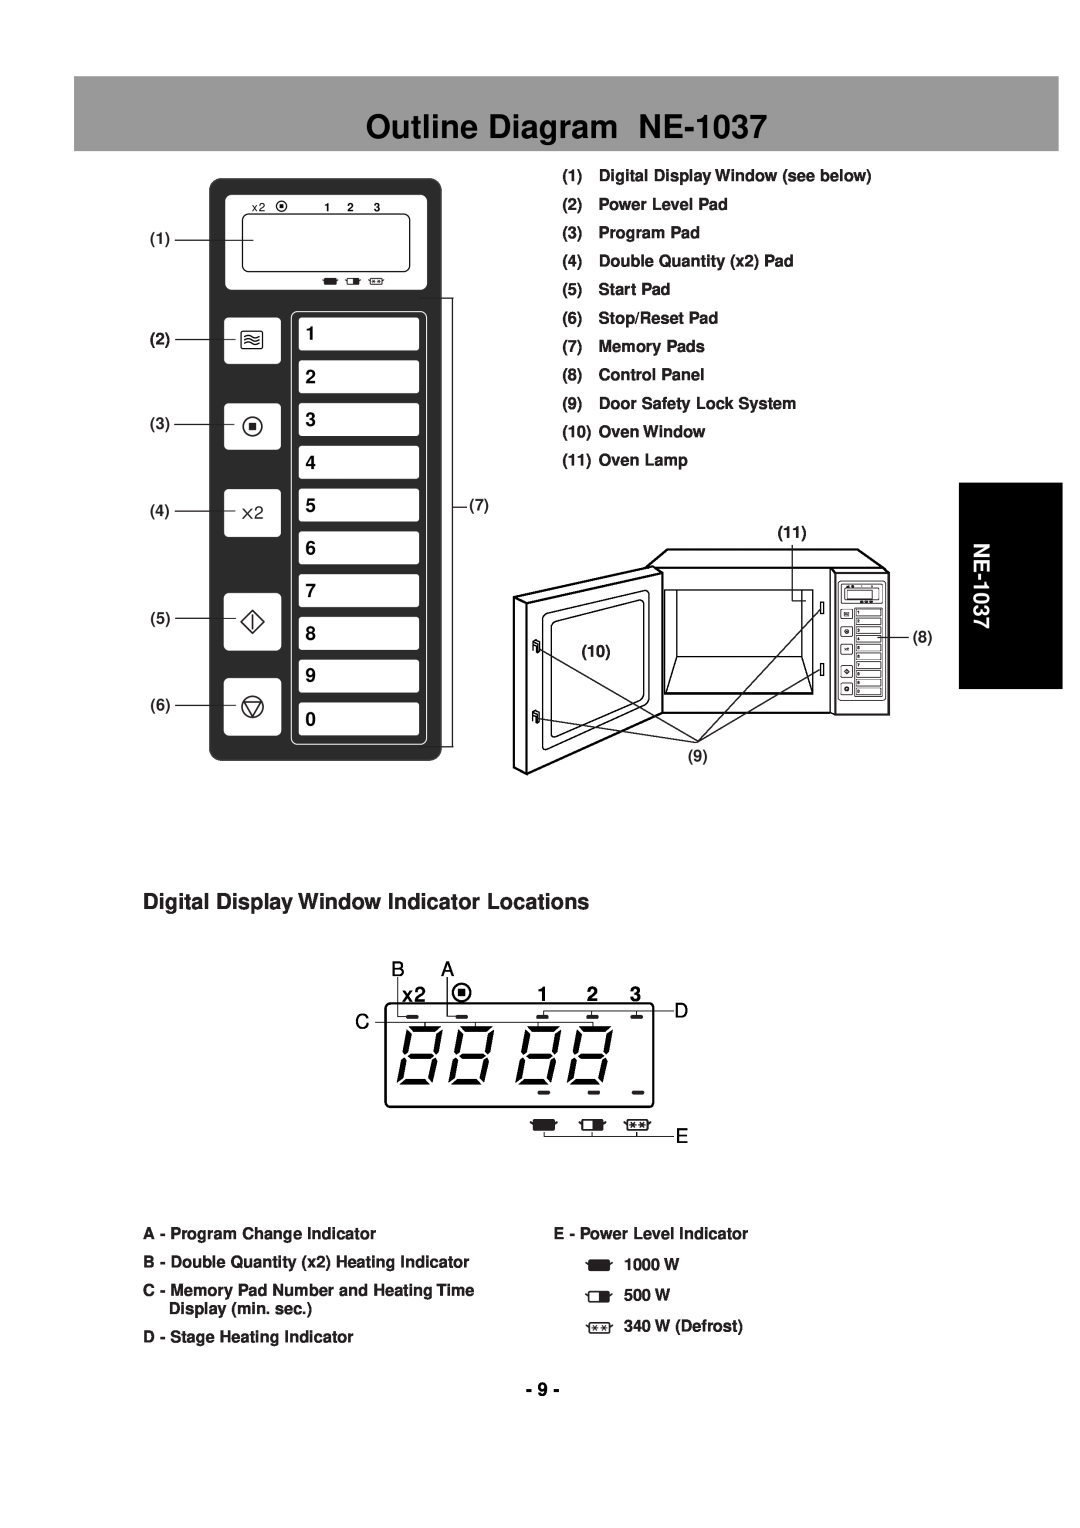 LG Electronics Outline Diagram NE-1037, Digital Display Window Indicator Locations, A - Program Change Indicator, 500 W 